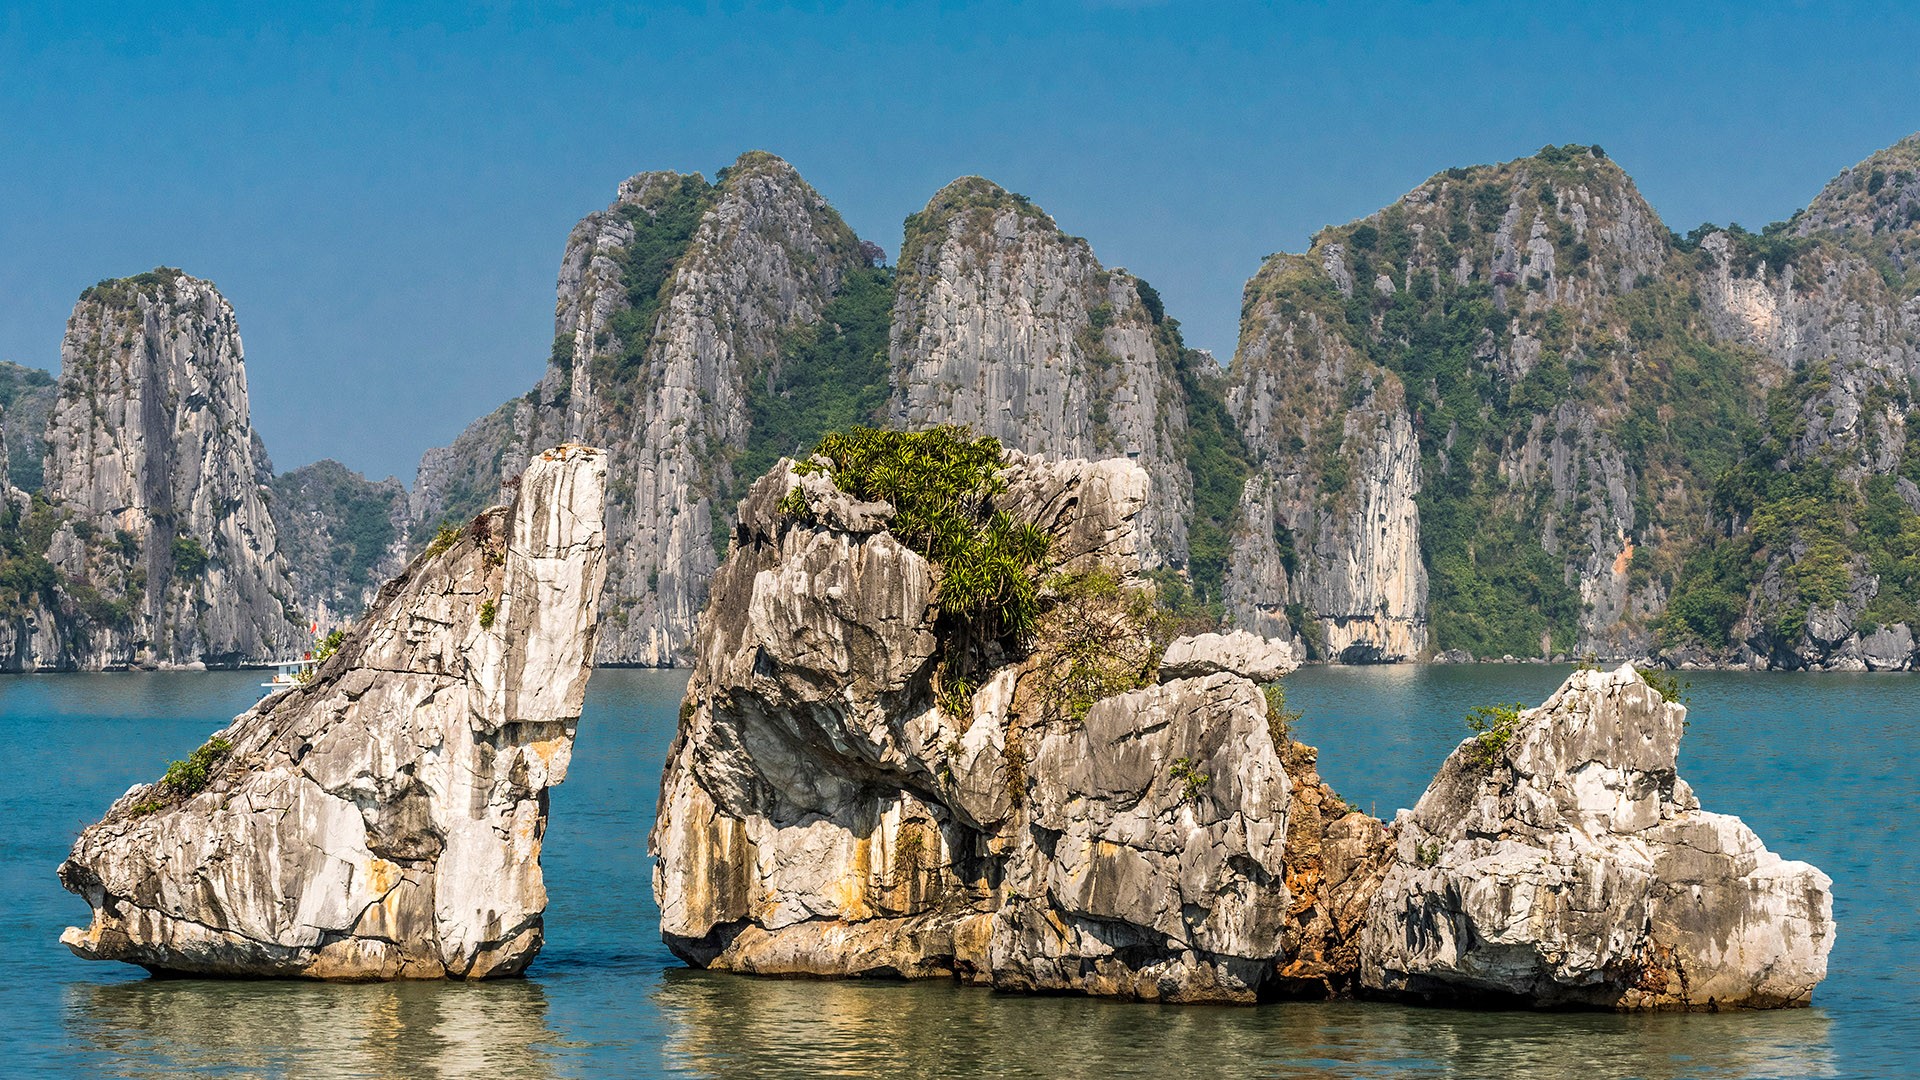 General 1920x1080 nature landscape rocks mountains sea limestone bay Ha Long Bay Vietnam